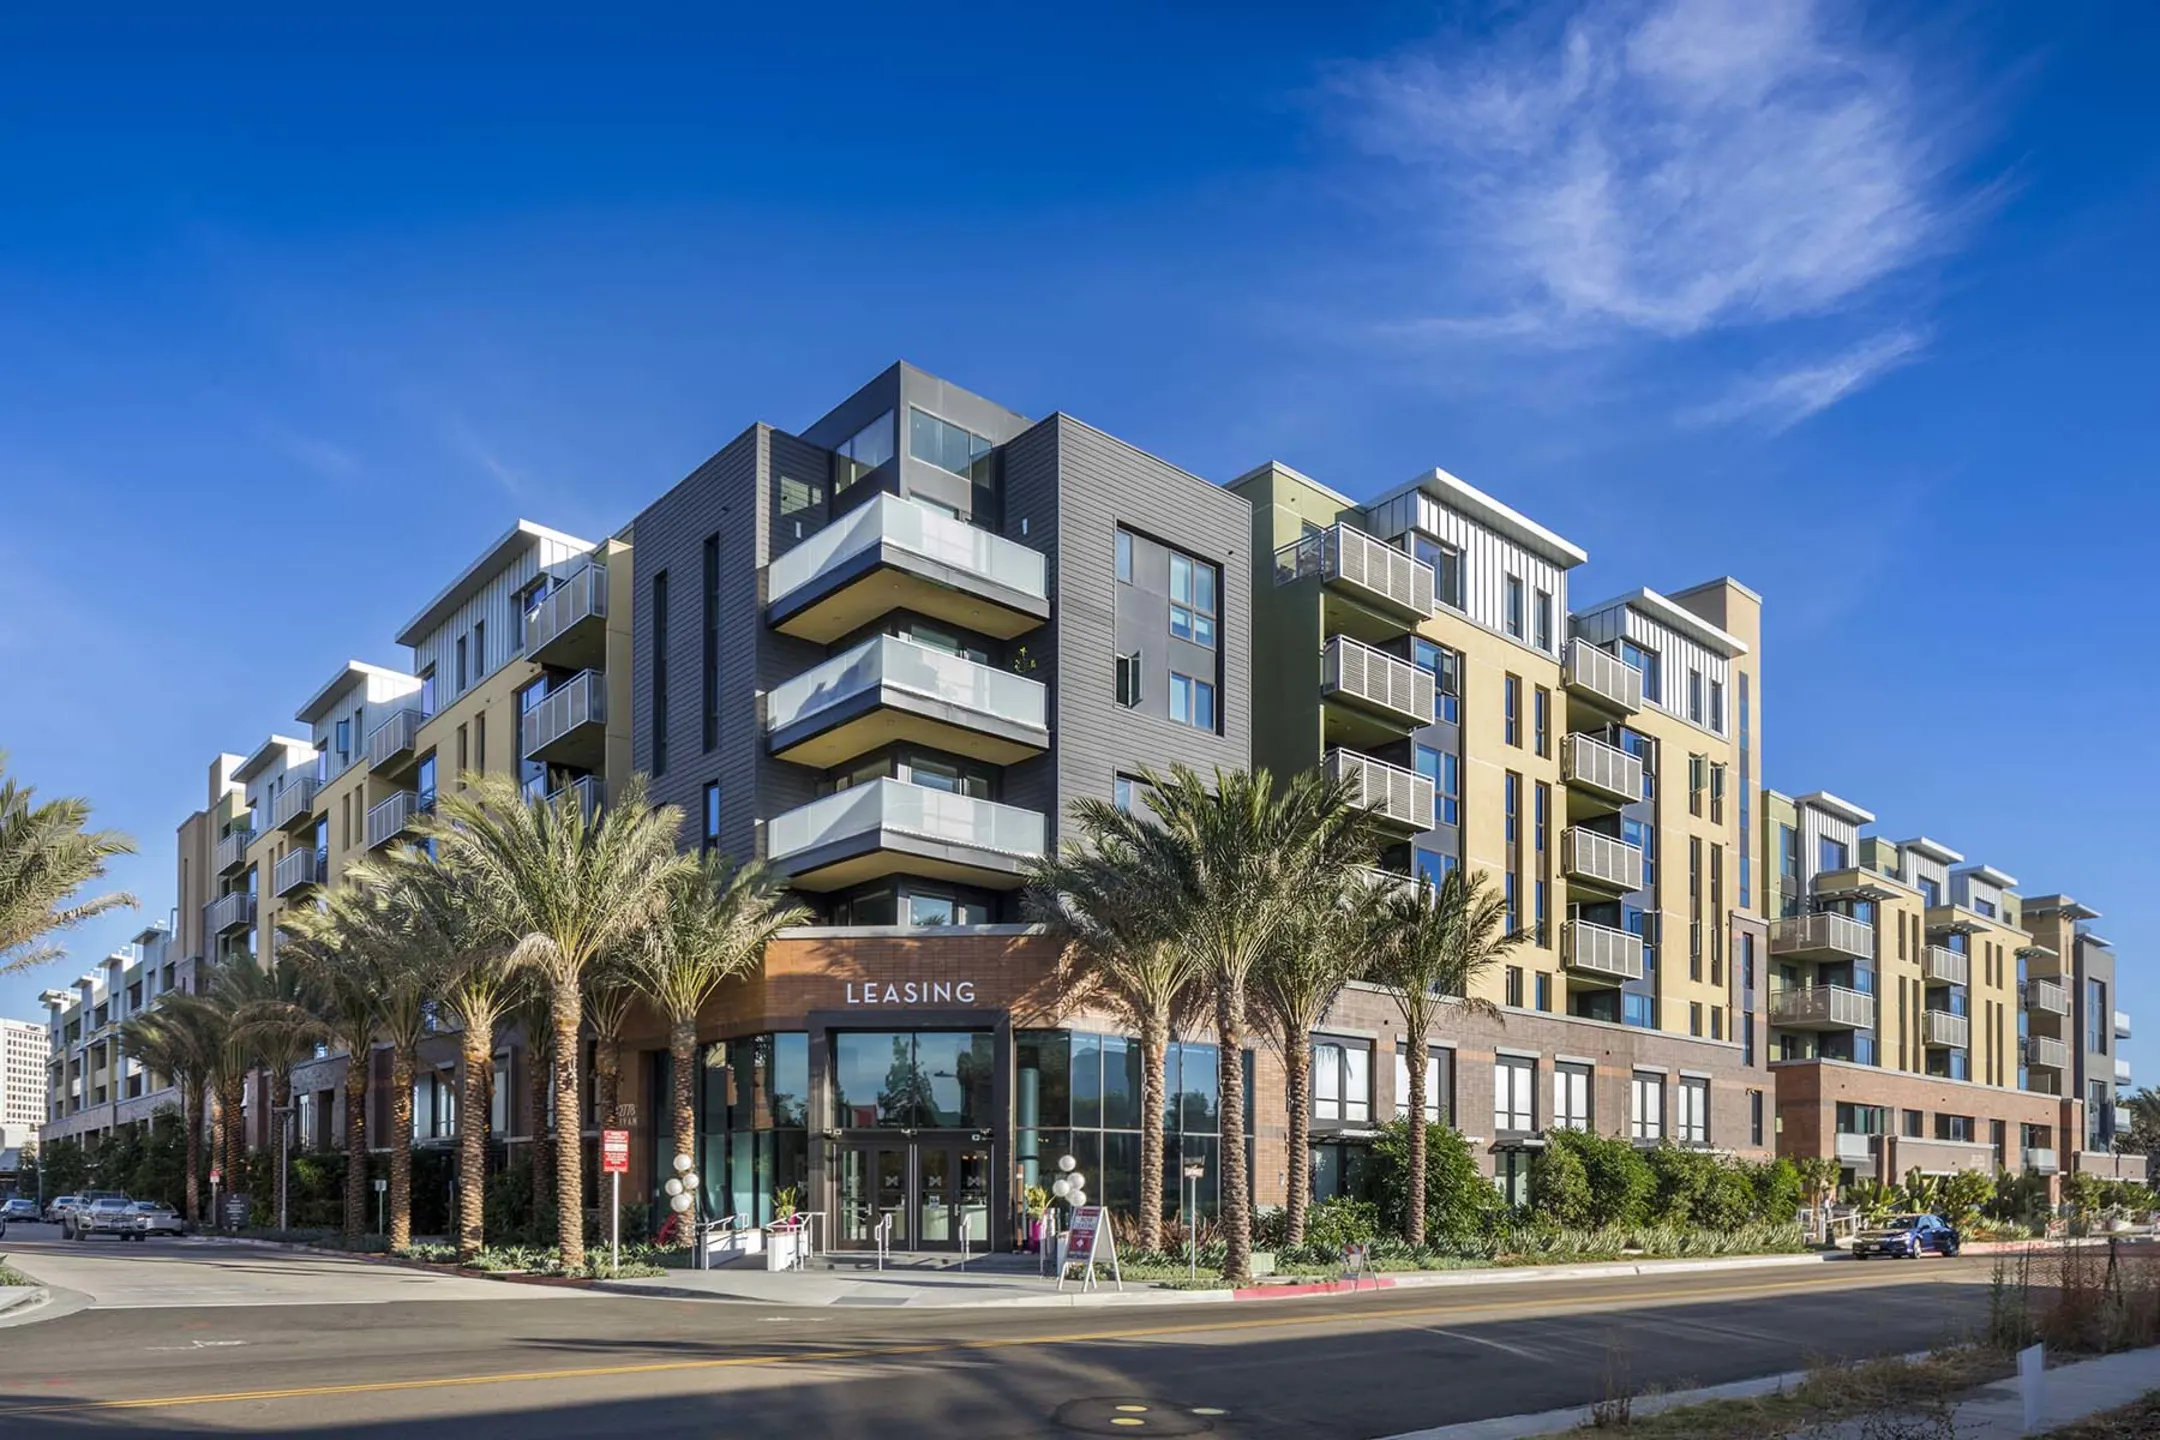 Building - Metropolis - Irvine, CA